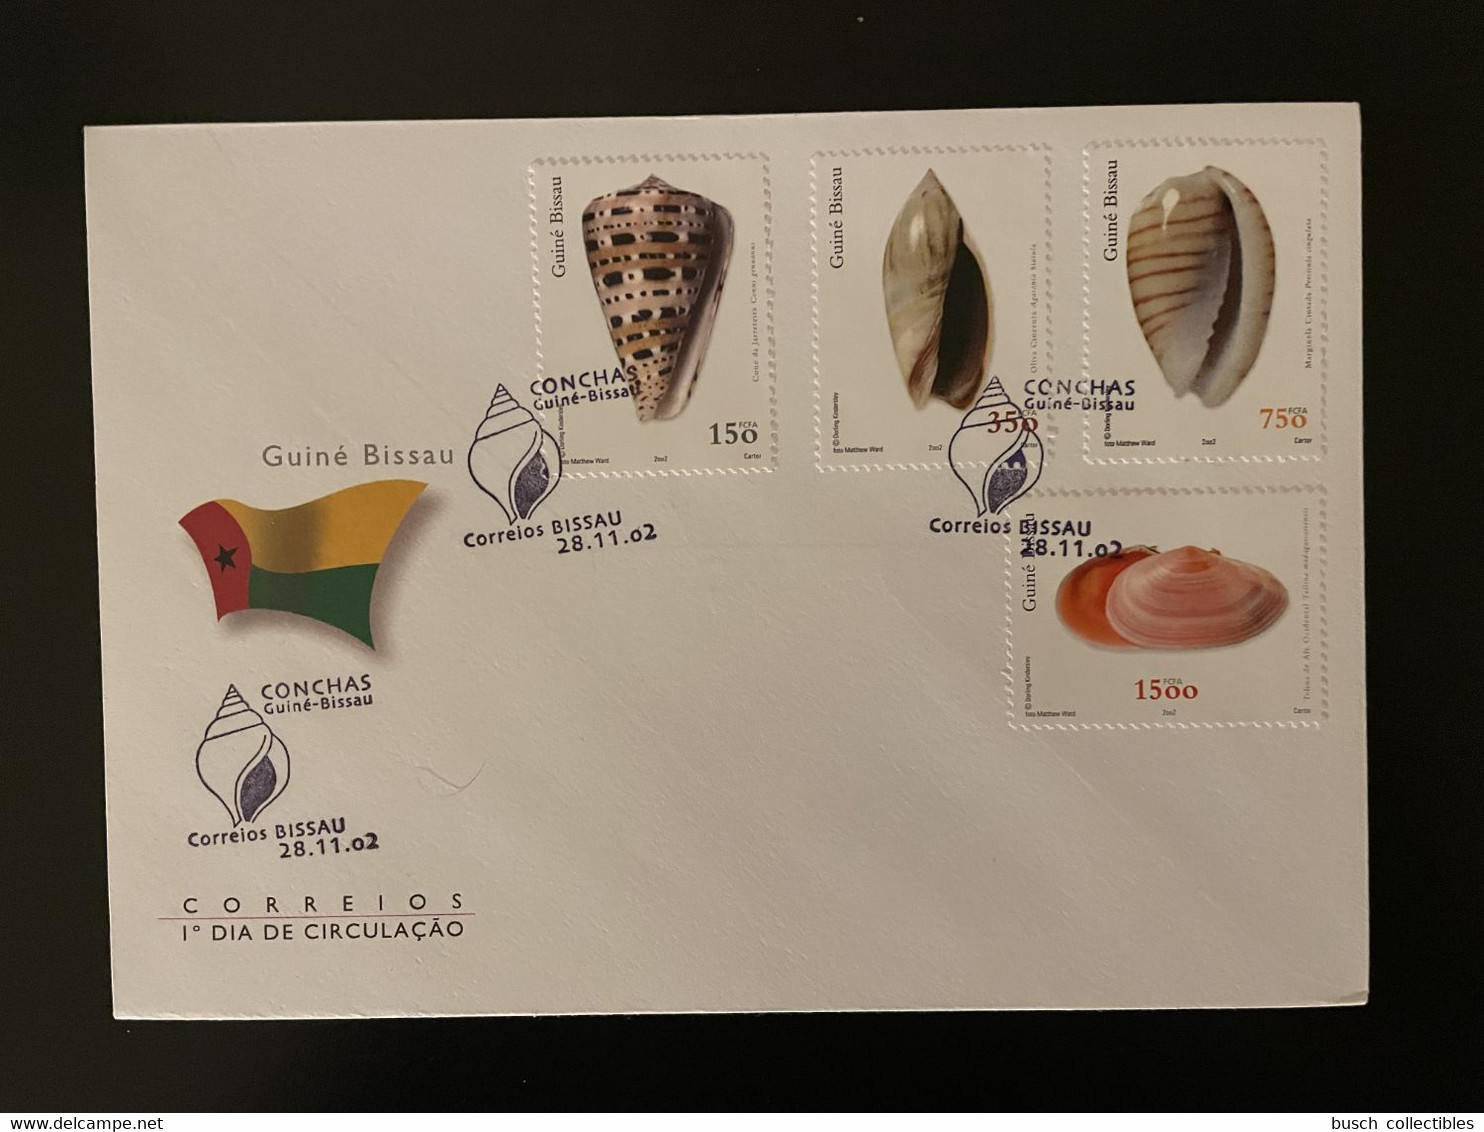 Guiné-Bissau Guinea Guinée Bissau 2002 Mi. 2021 - 2024 FDC Mollusque Weichtier Shell Coquillage Muschel - Conchiglie